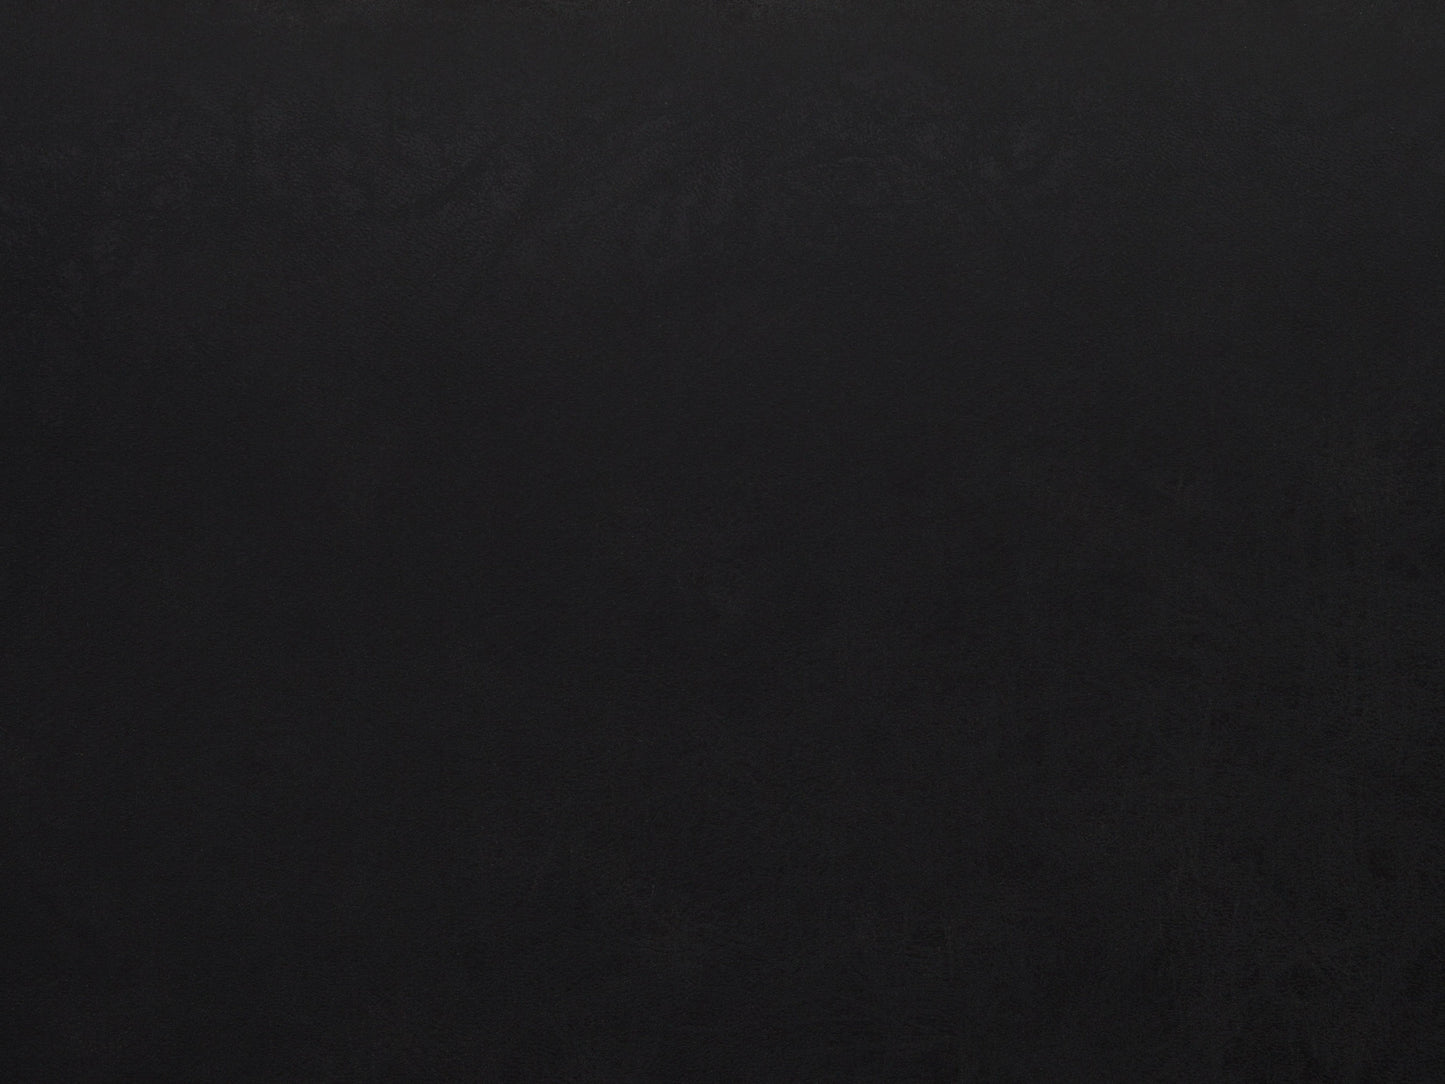 black Backless Bar Stools Set of 2 Milo Collection detail image by CorLiving#color_black